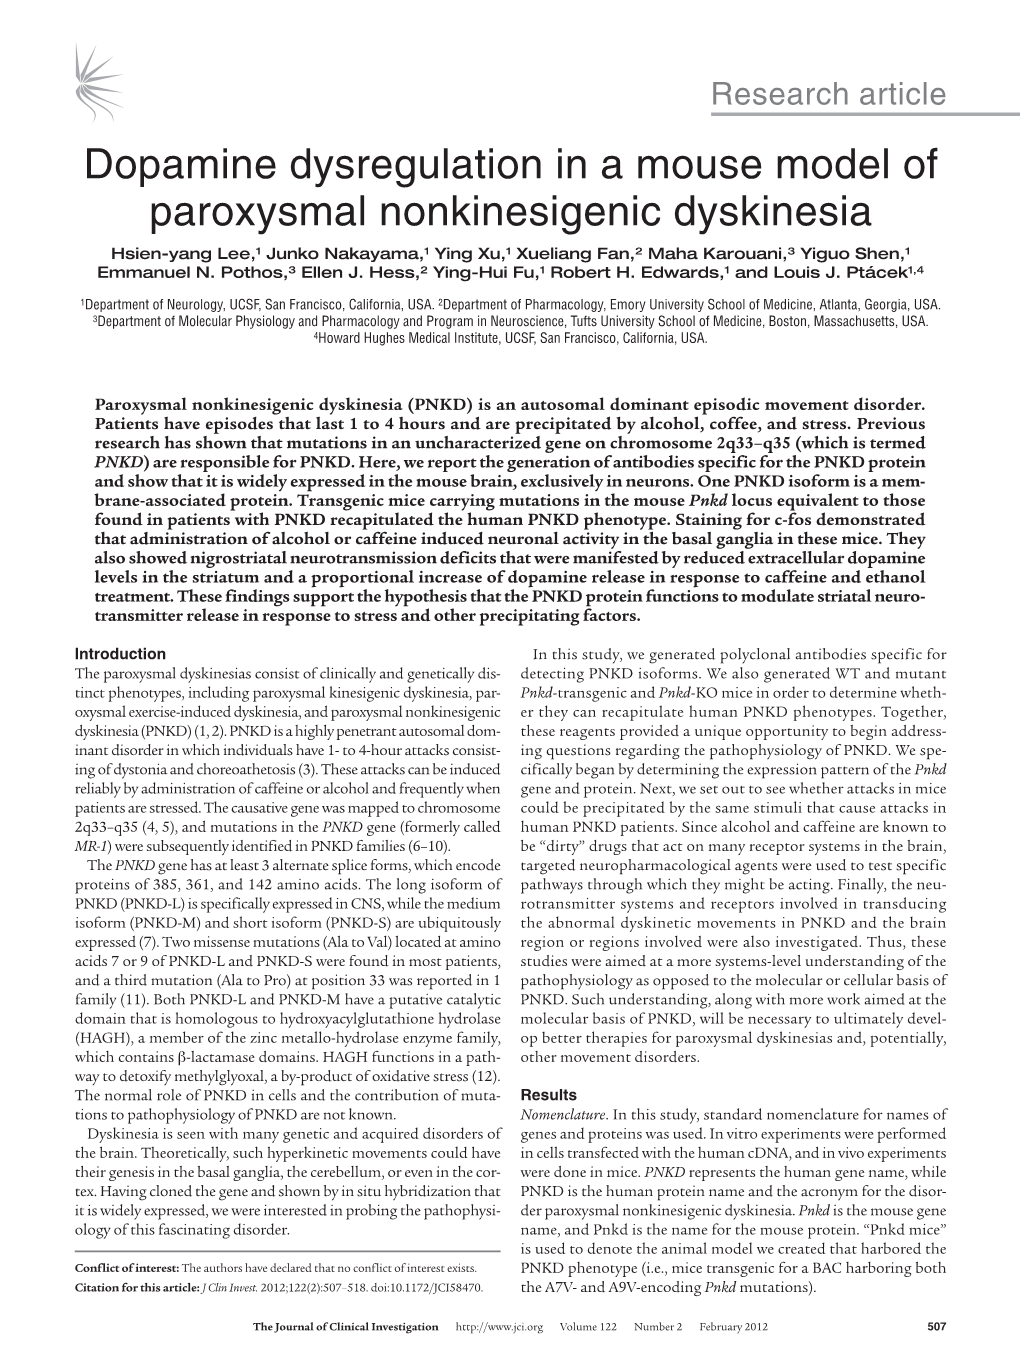 Dopamine Dysregulation in a Mouse Model of Paroxysmal Nonkinesigenic Dyskinesia